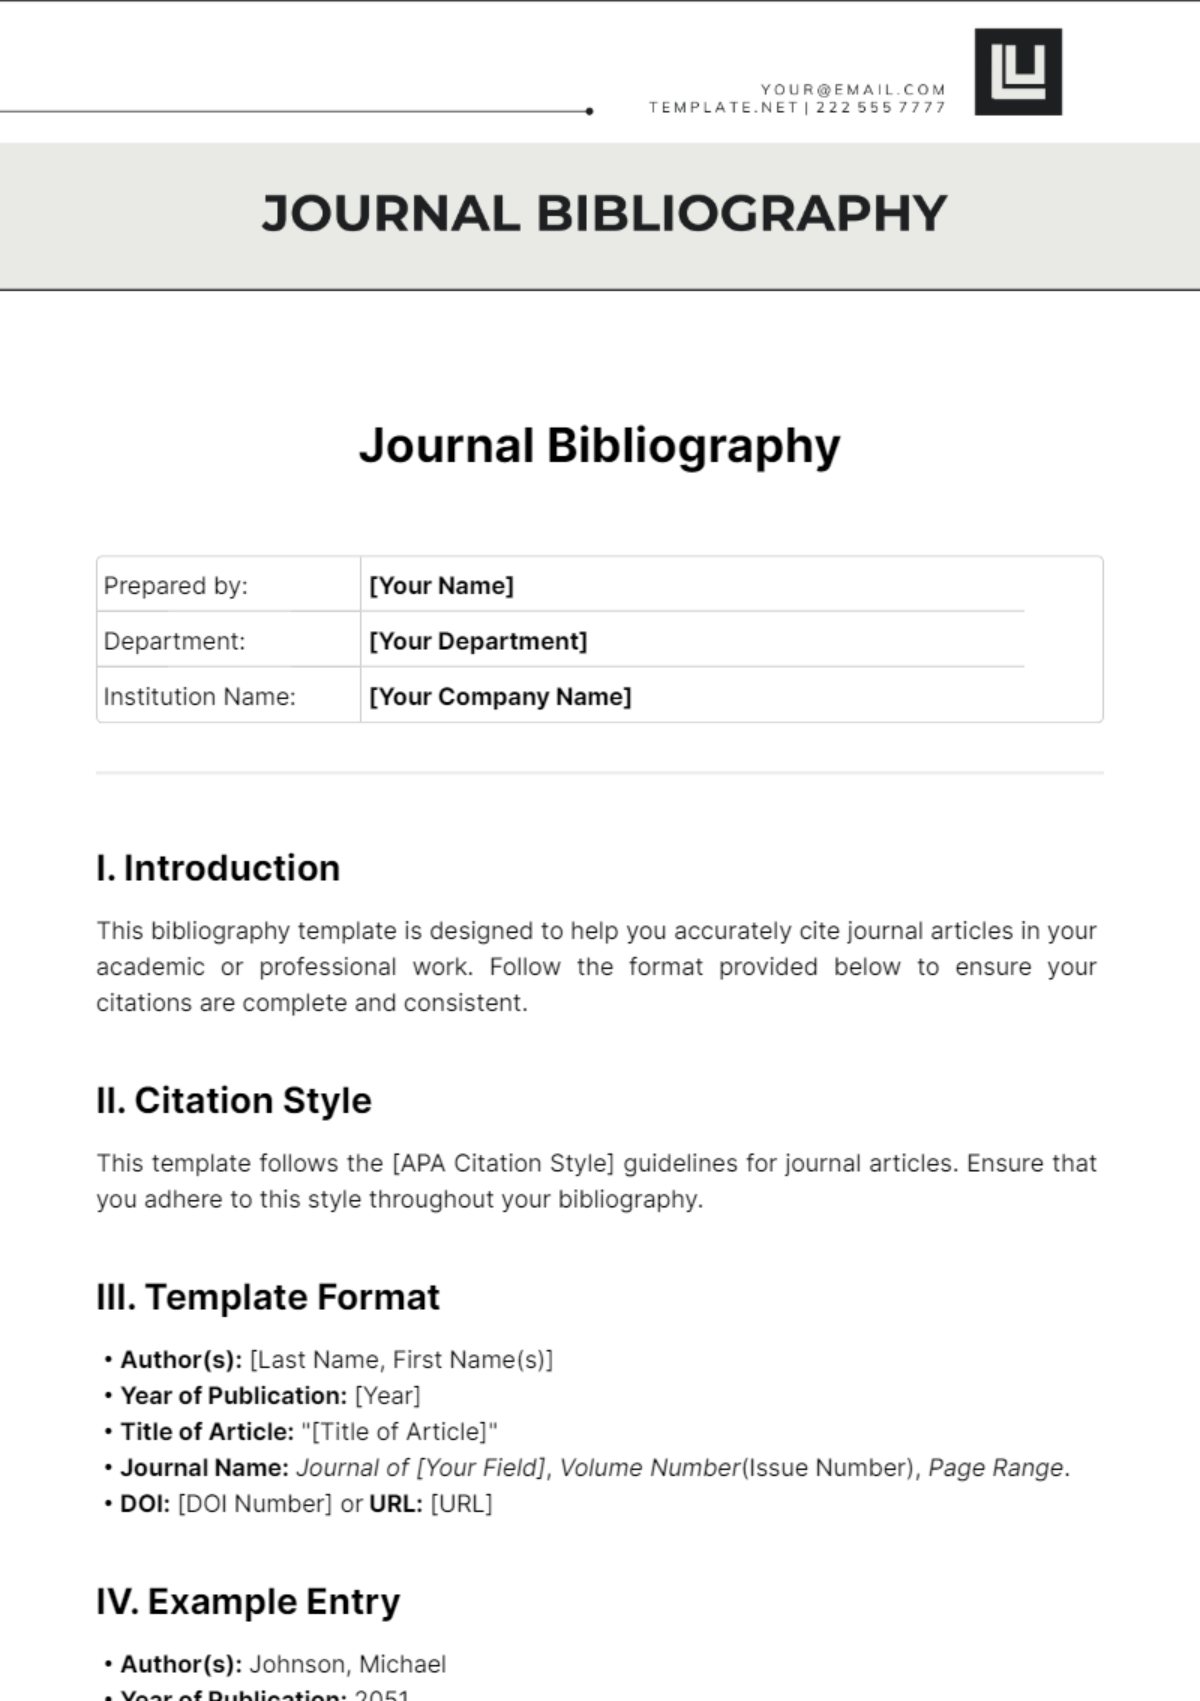 Journal Bibliography Template